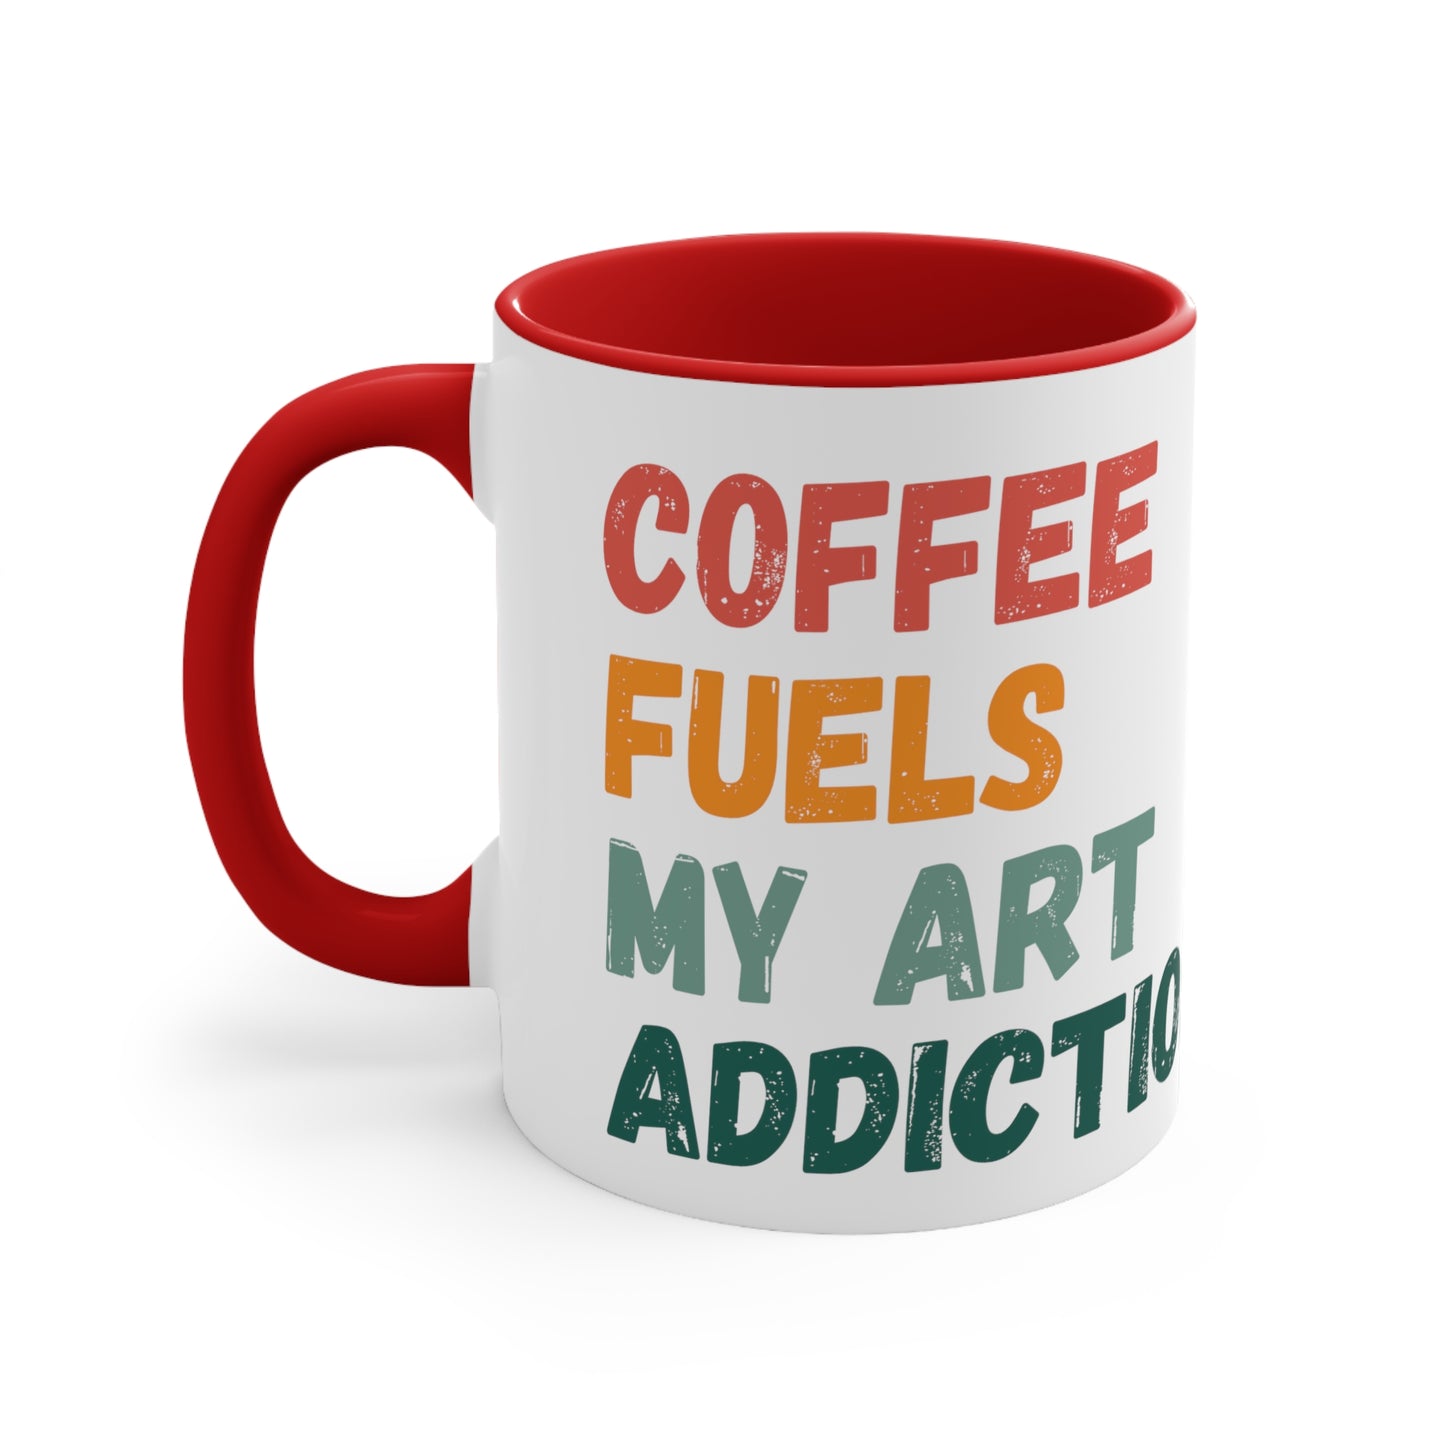 Coffee fuels my art addiction